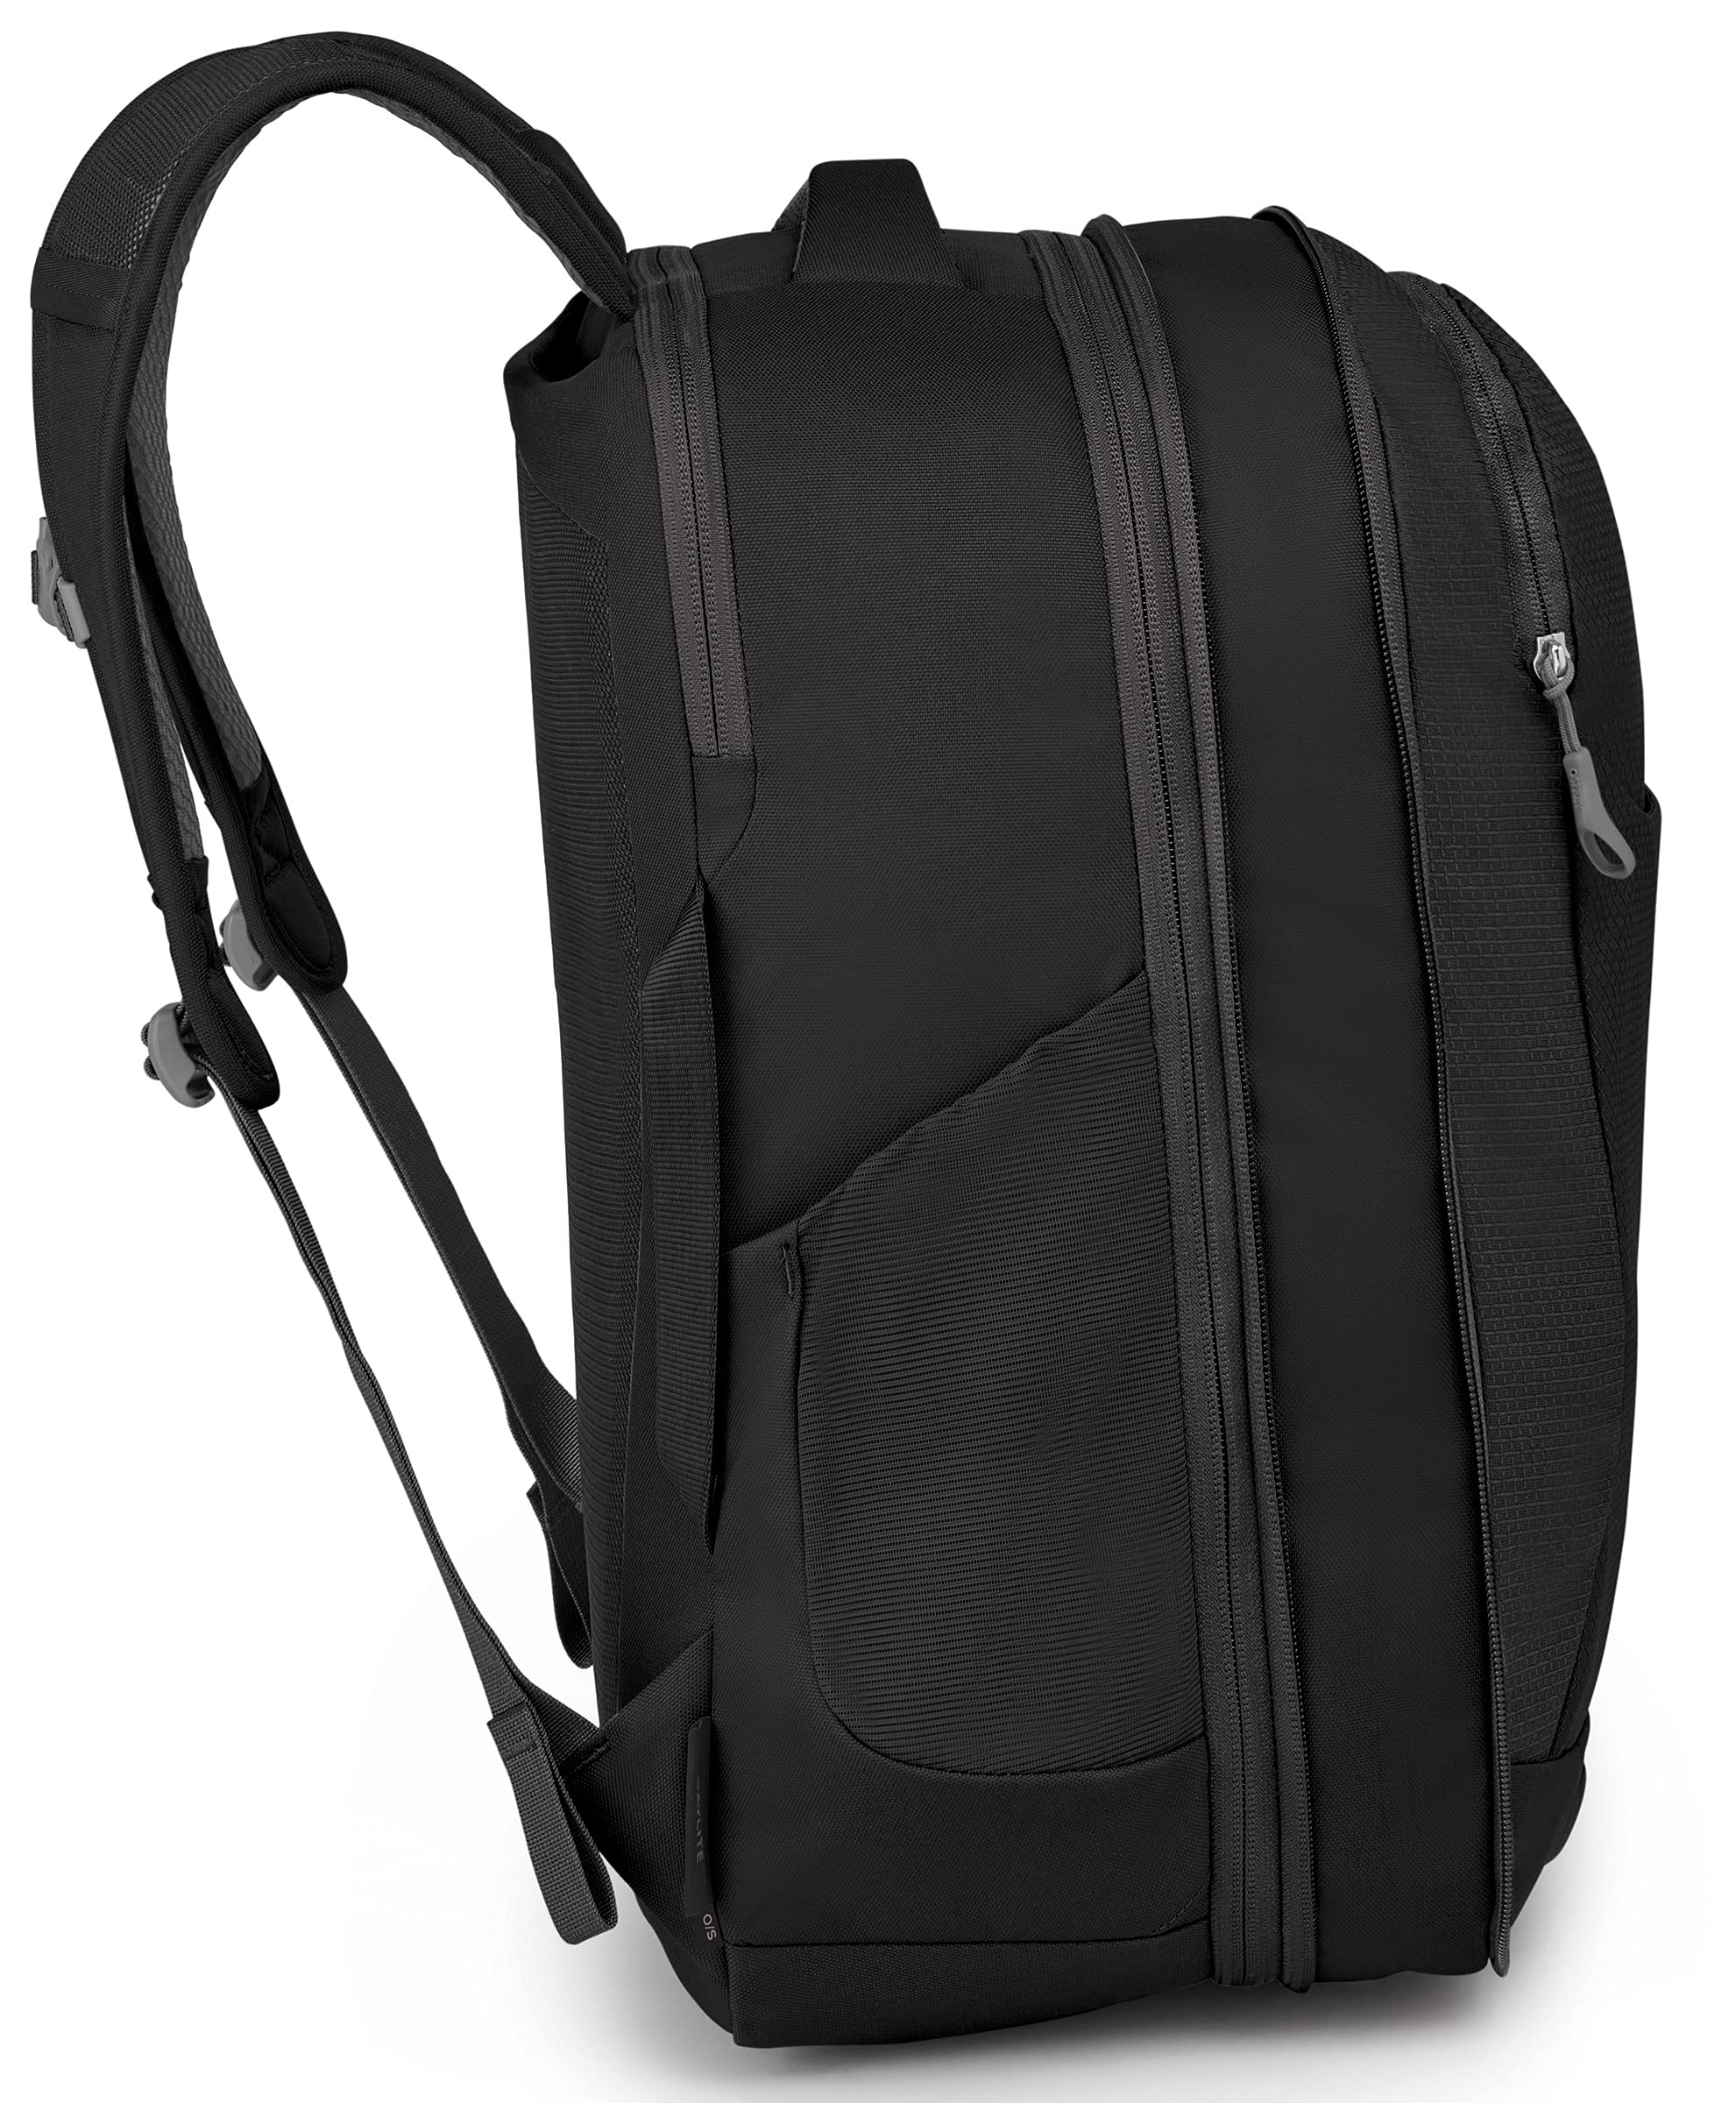 Osprey Daylite Expandable 26+6 Travel Backpack, Black, O/S